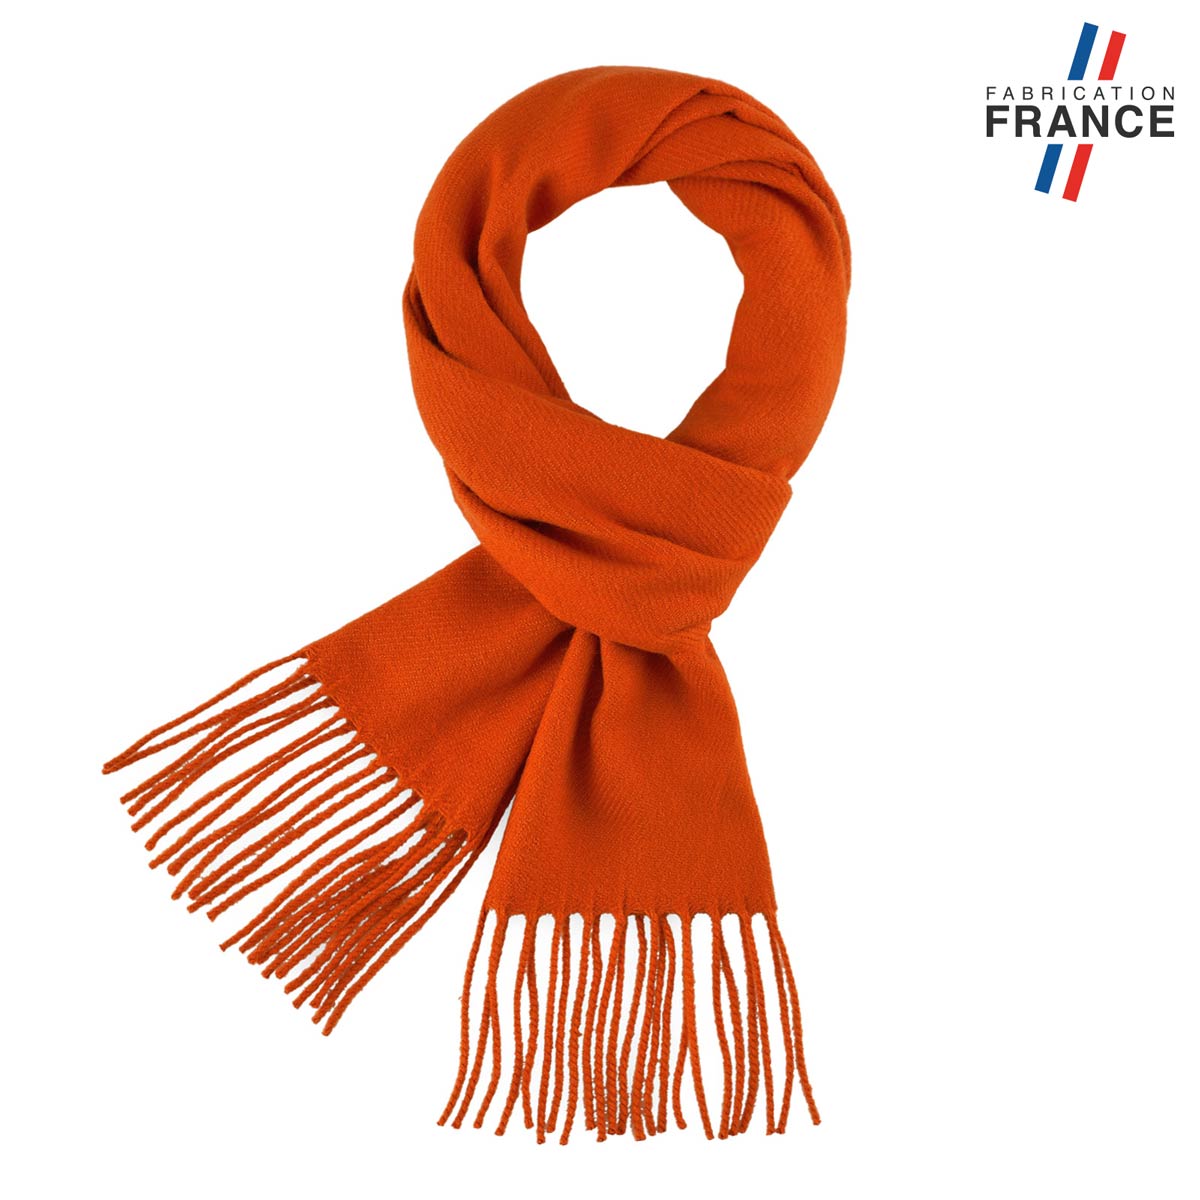 Echarpe-franges-orange-fabrication-francaise--AT-06575_F12-1FR